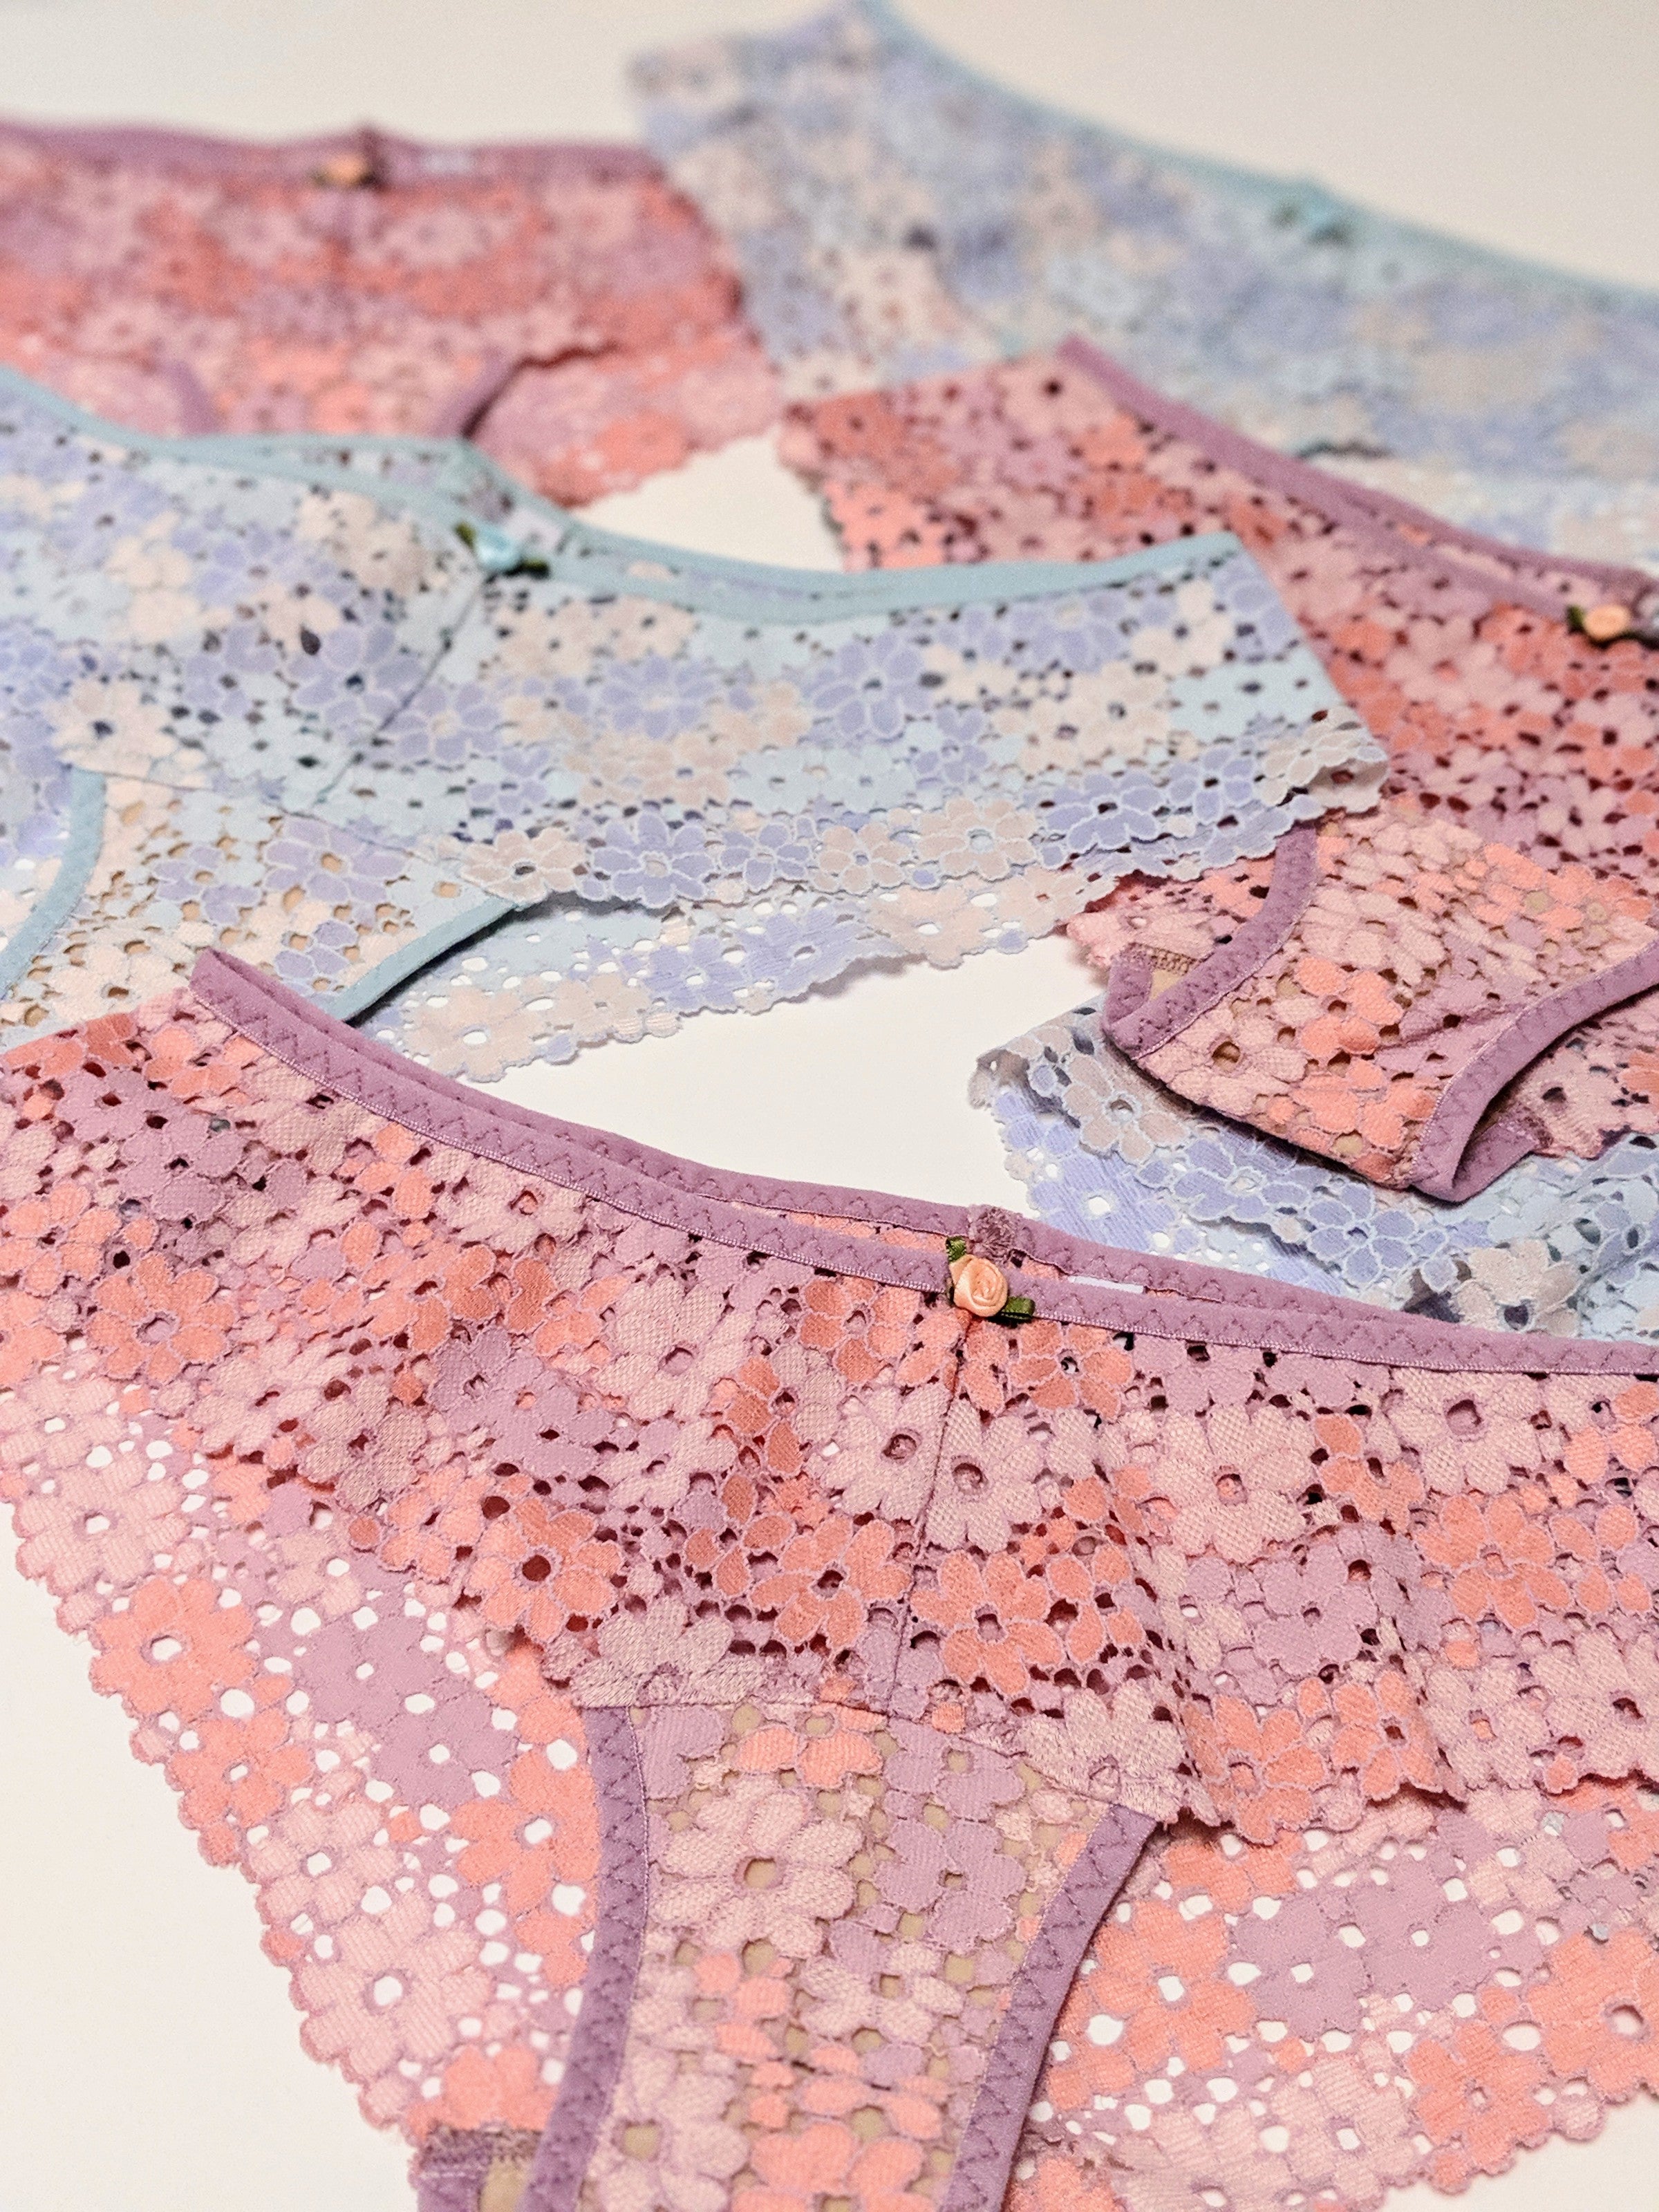 Blue and pink lace underwear set by designer Angela Friedman